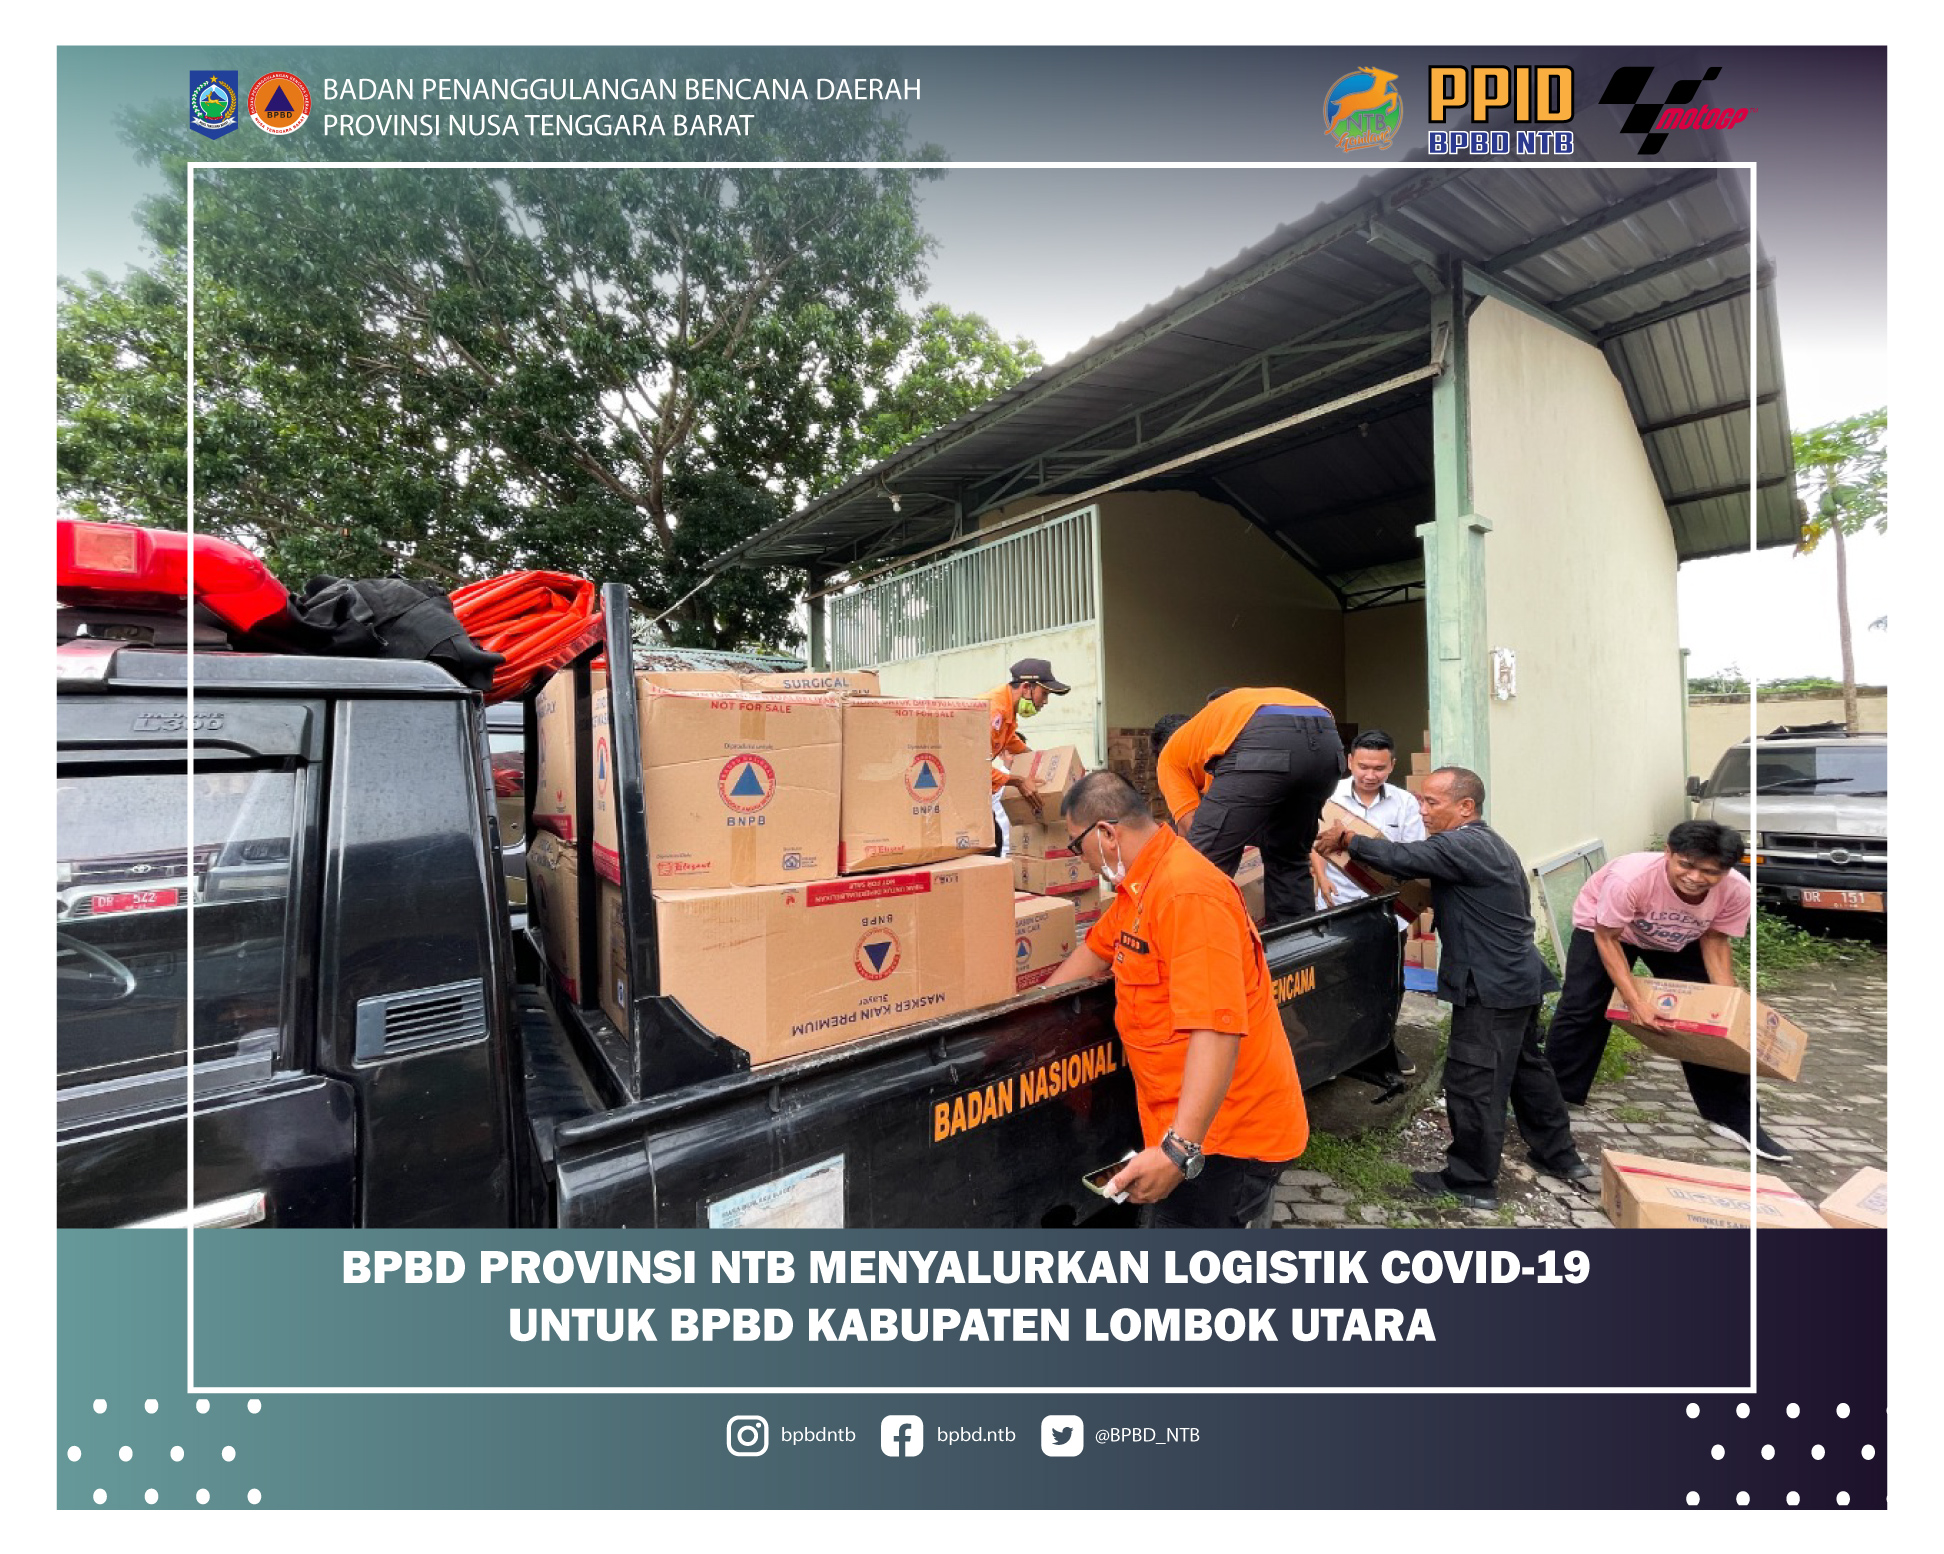 BPBD Provinsi NTB Menyalurkan Logistik Covid-19 Ke BPBD Kabupaten Lombok Utara